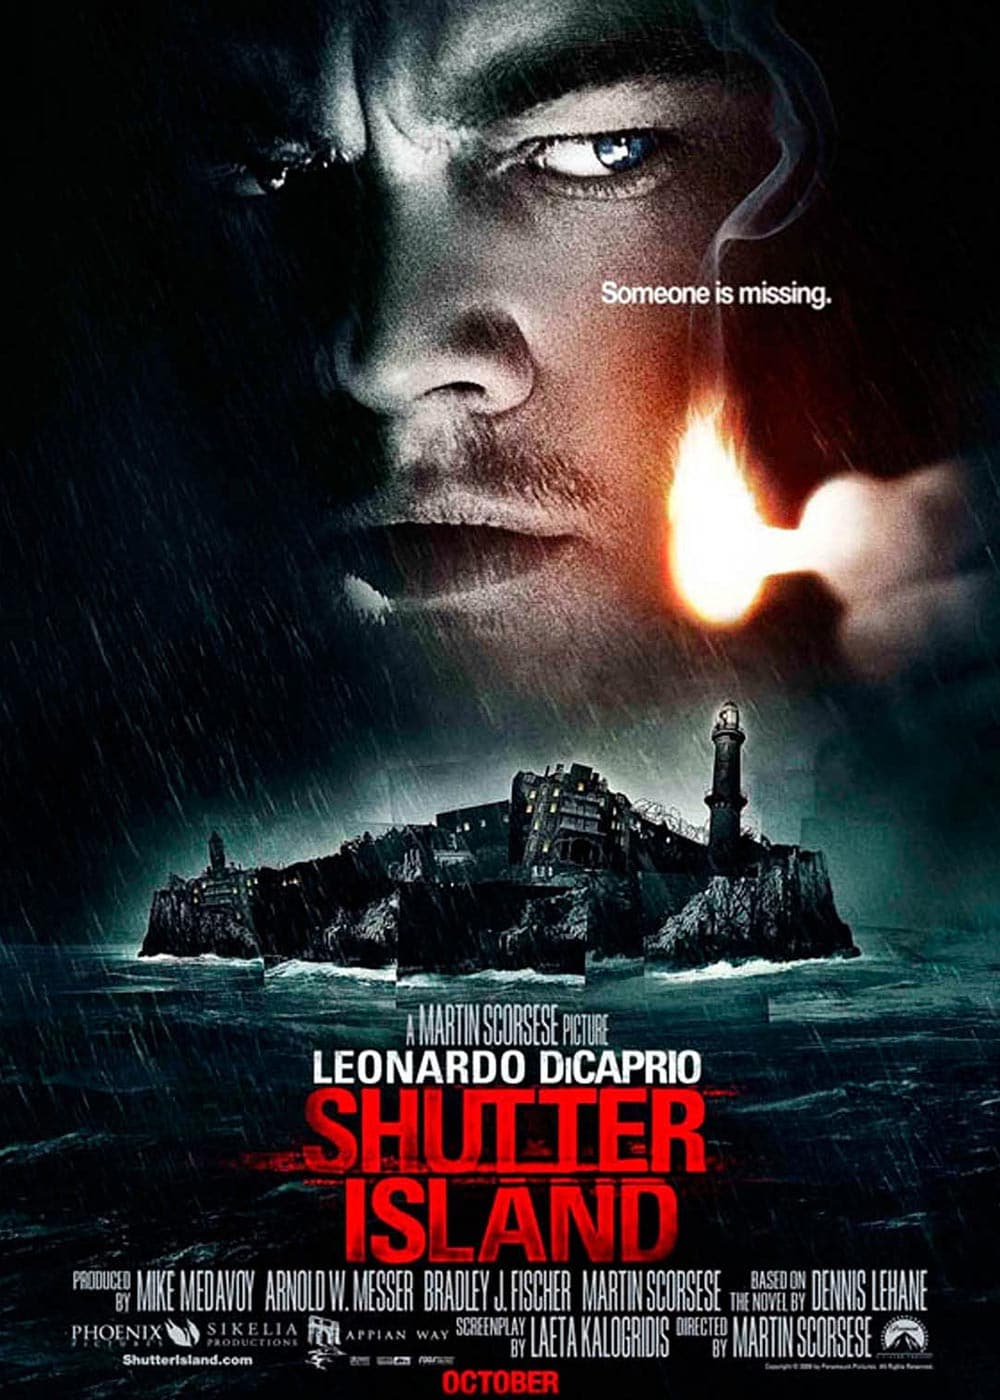 Shutter (2004) - News - IMDb